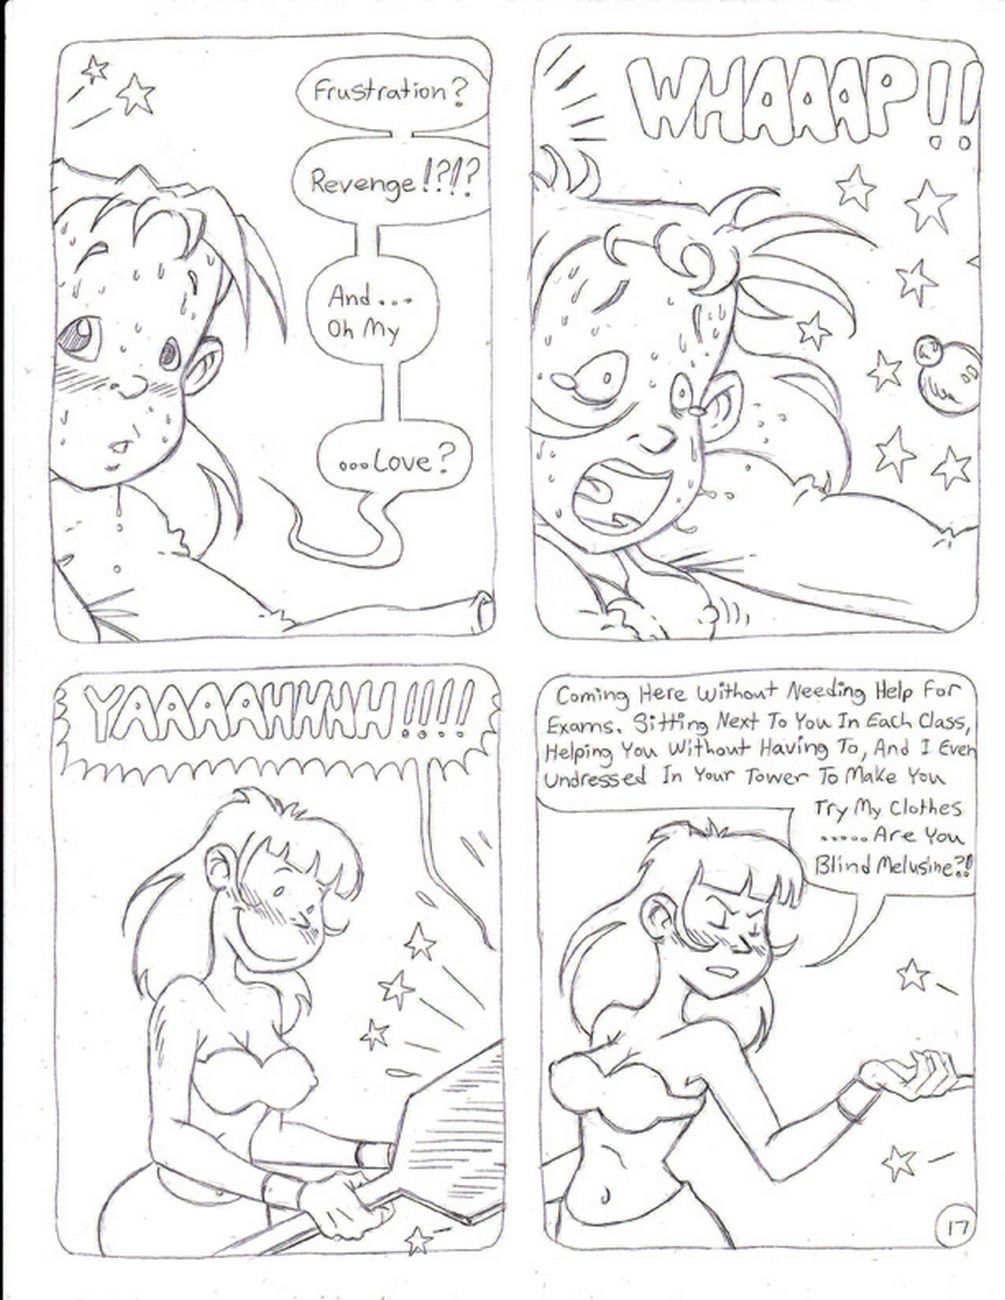 Krapella's Revenge page 18